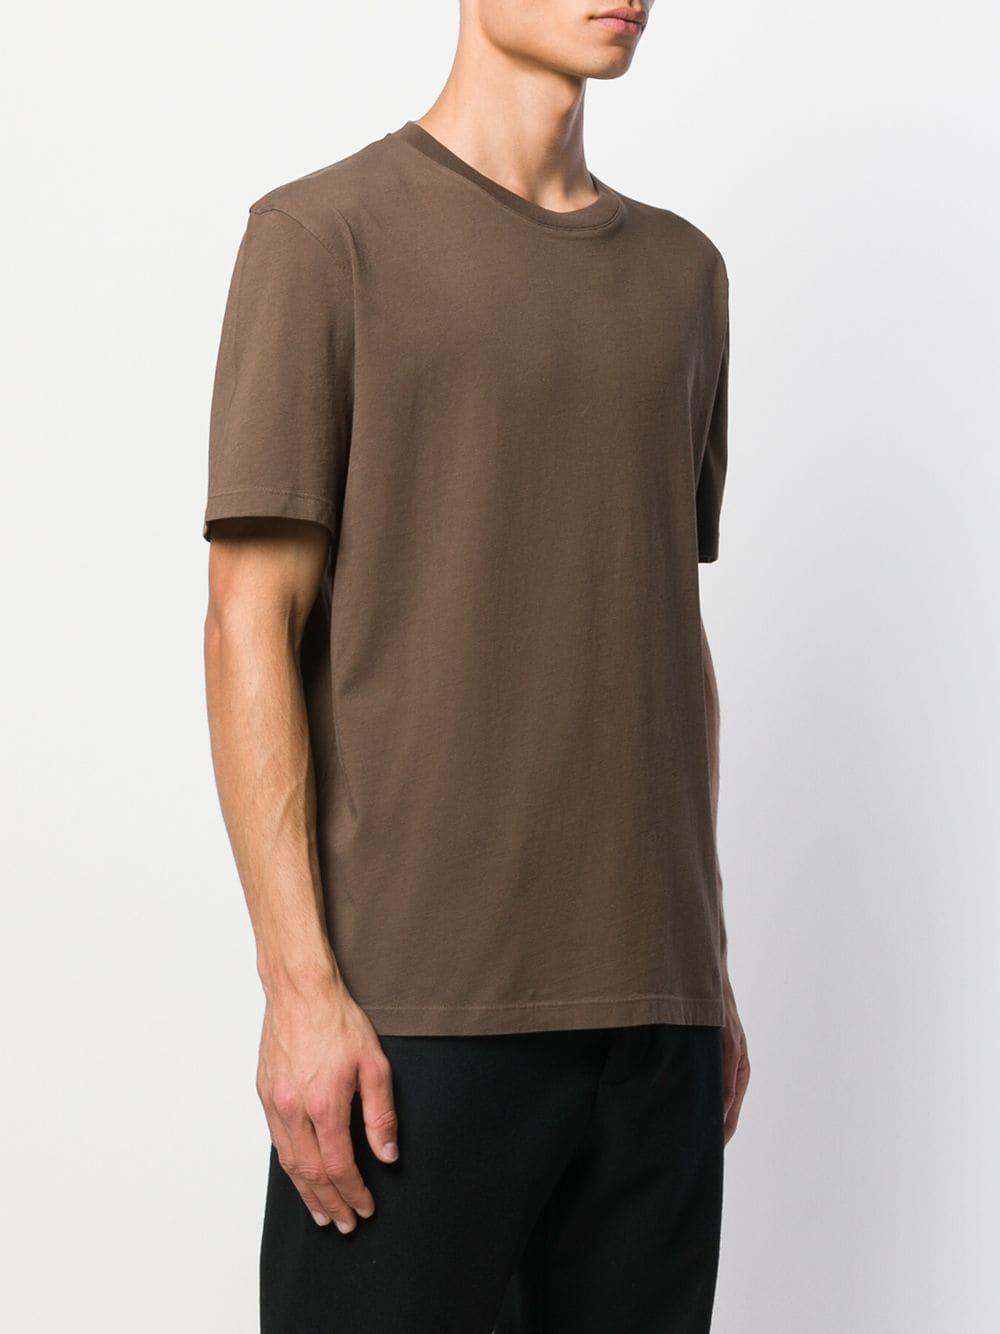 Maison Margiela Cotton Short-sleeved T-shirt in Brown for Men - Lyst